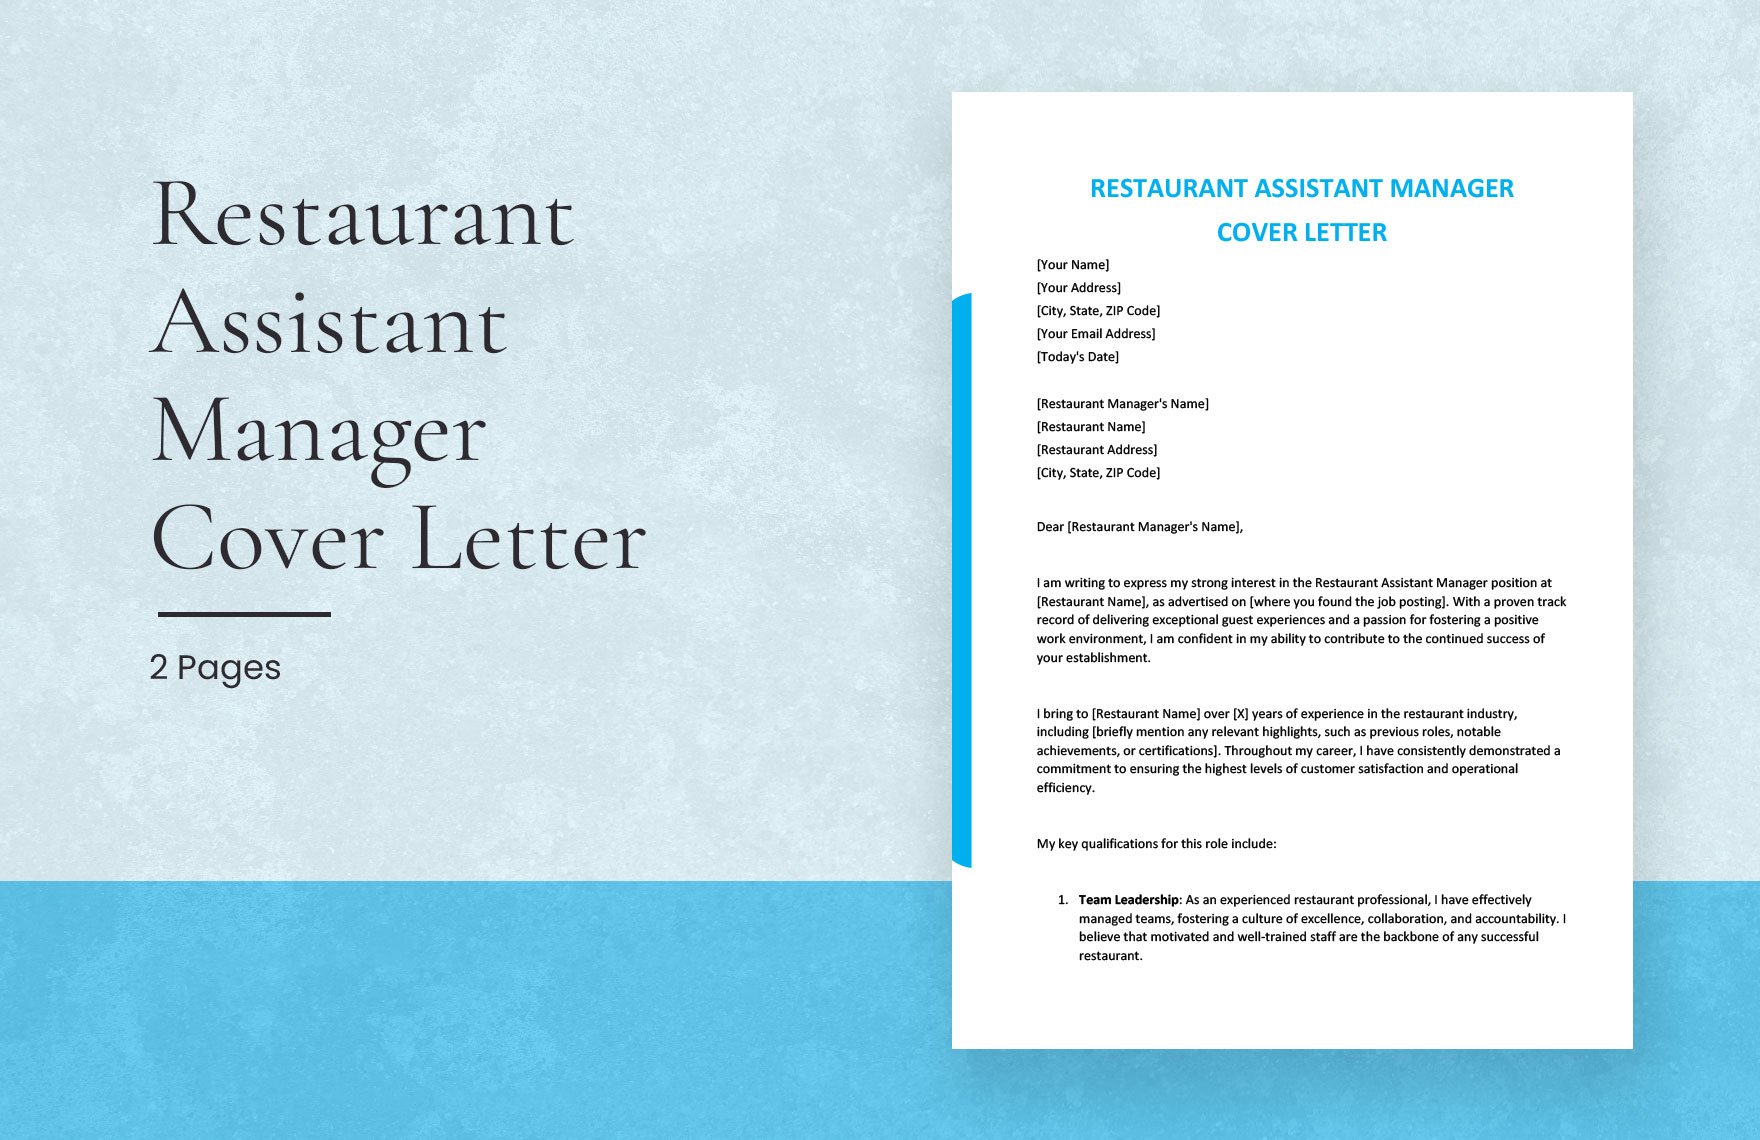 Restaurant Assistant Manager Cover Letter